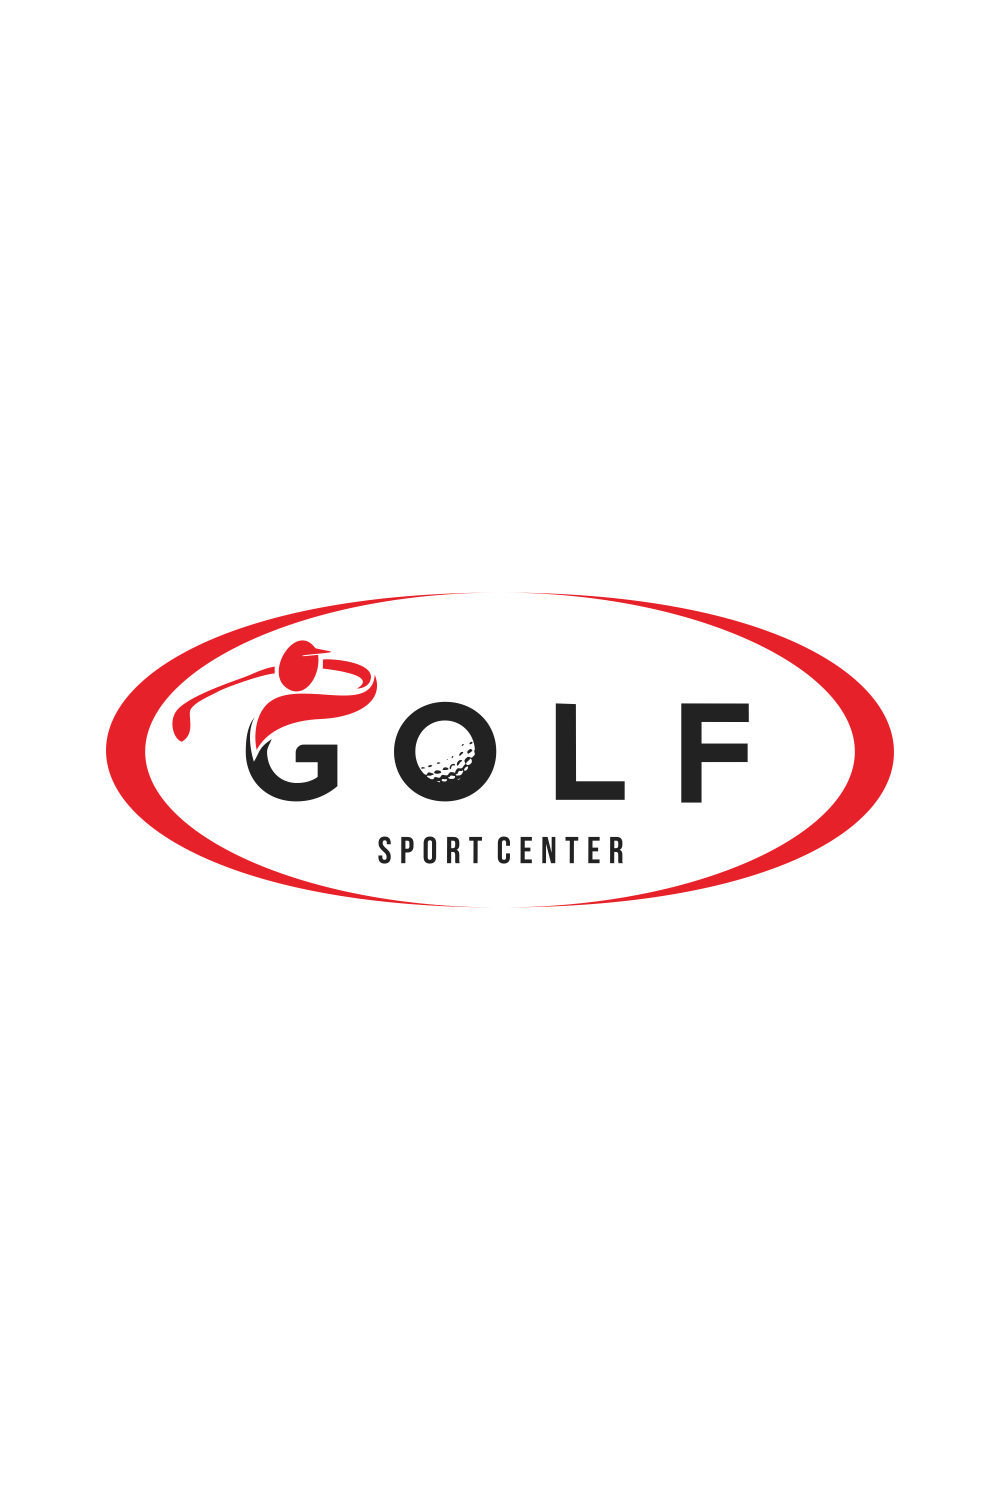 Golf logo in modern minimalist sport style pinterest preview image.